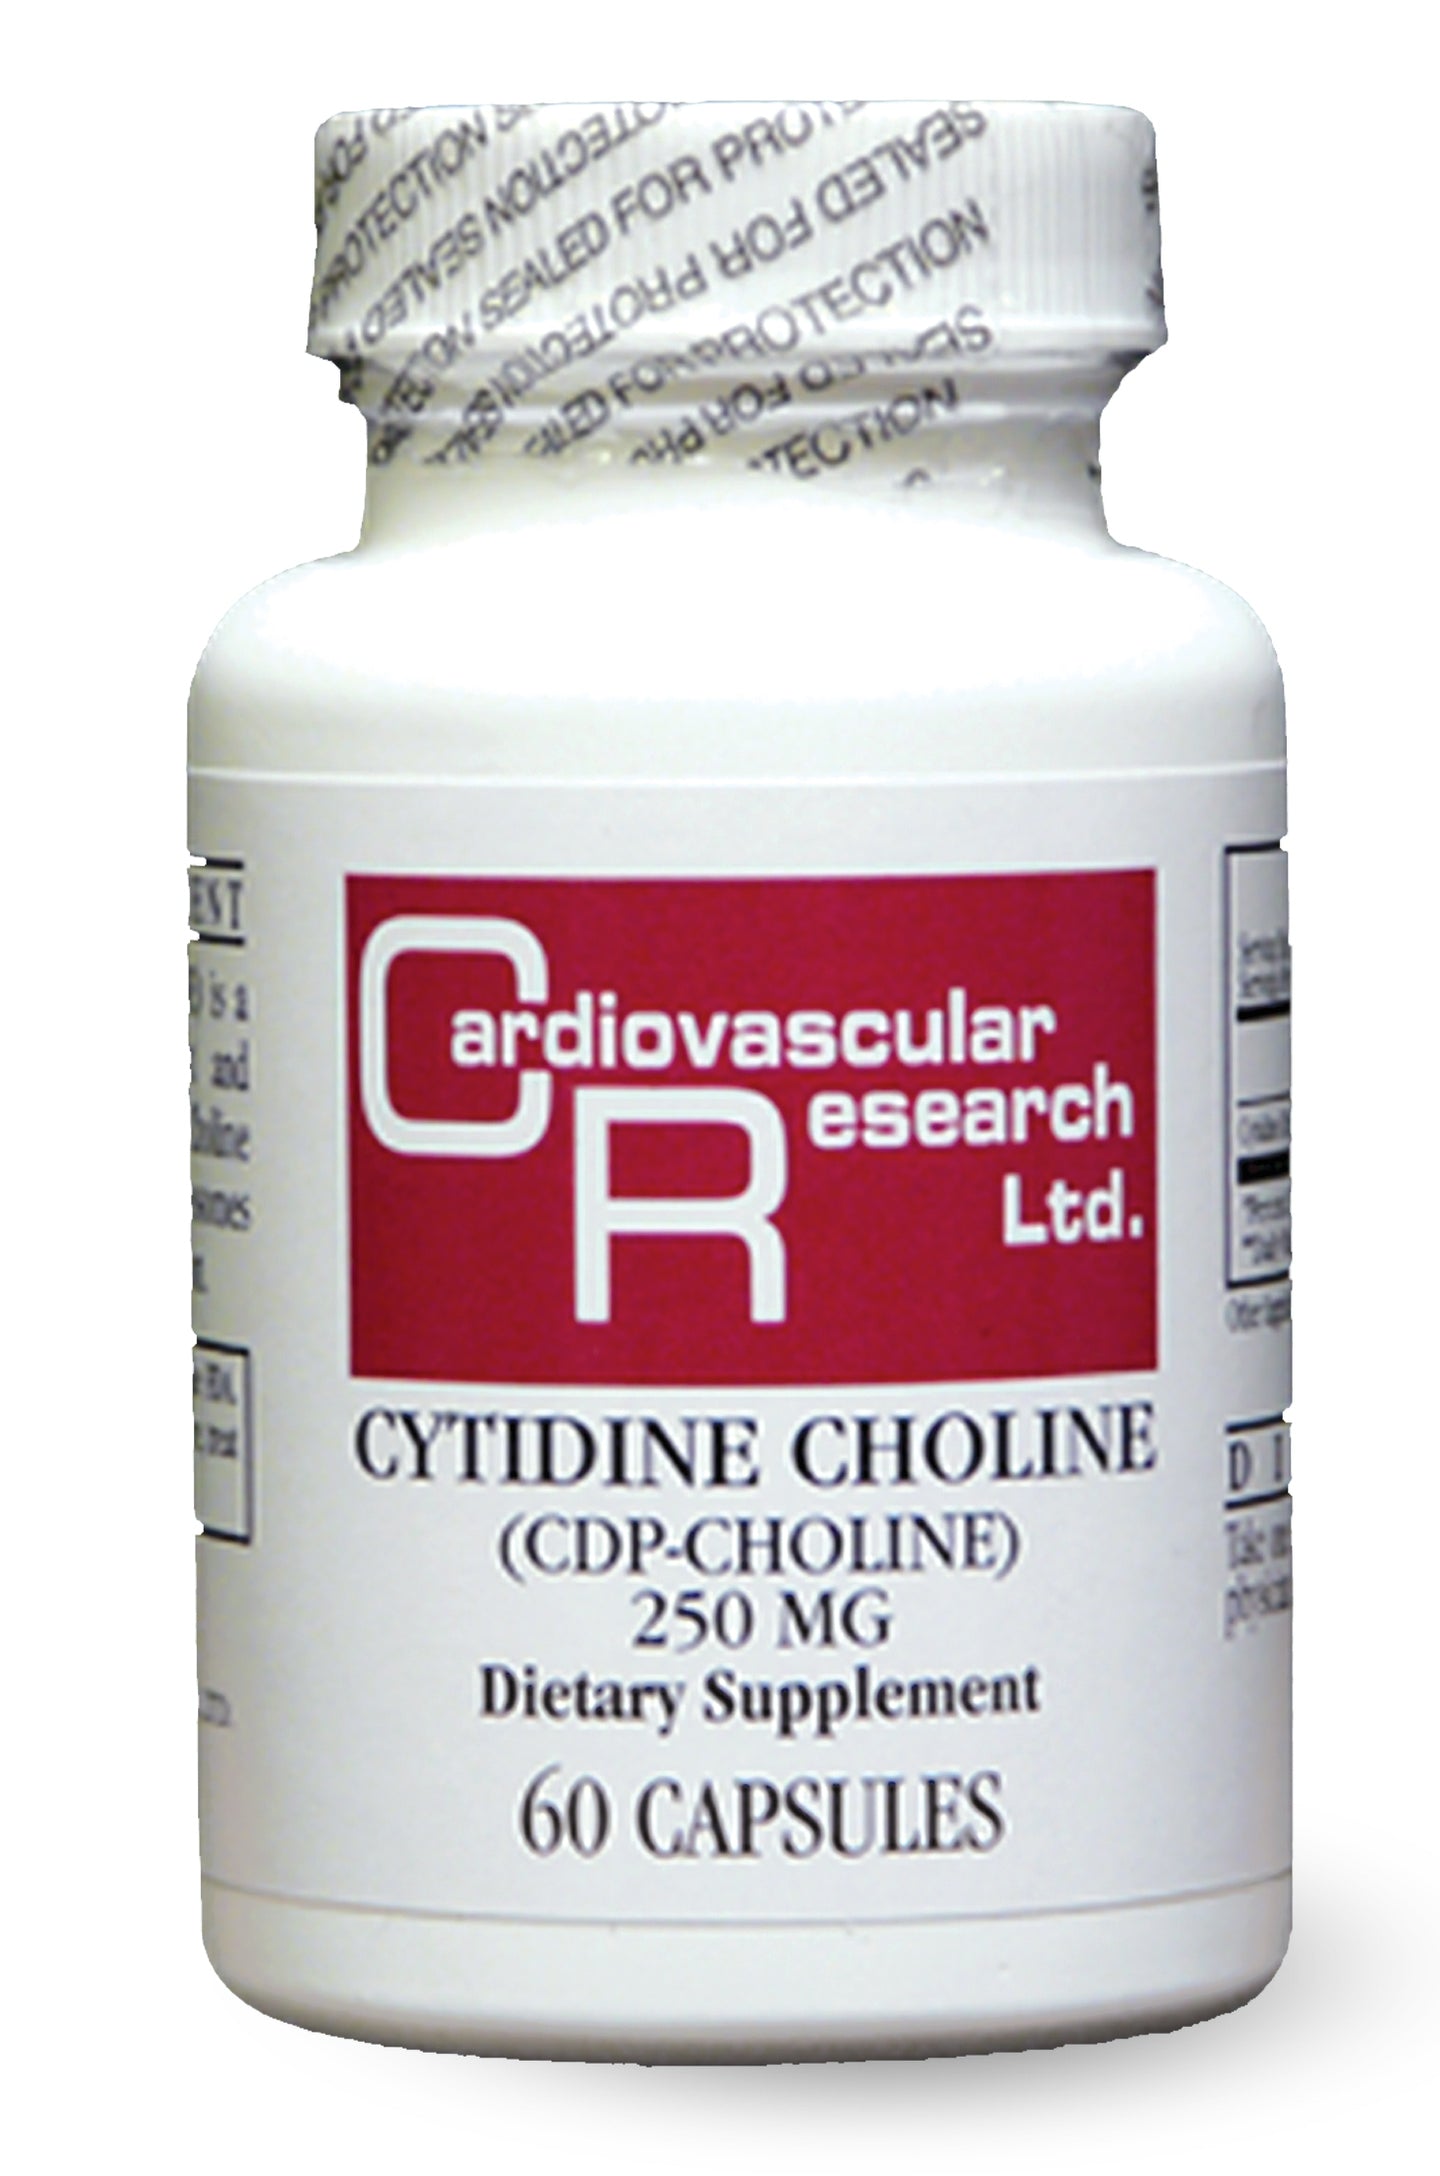 Cytidine Choline (CDP-Choline)